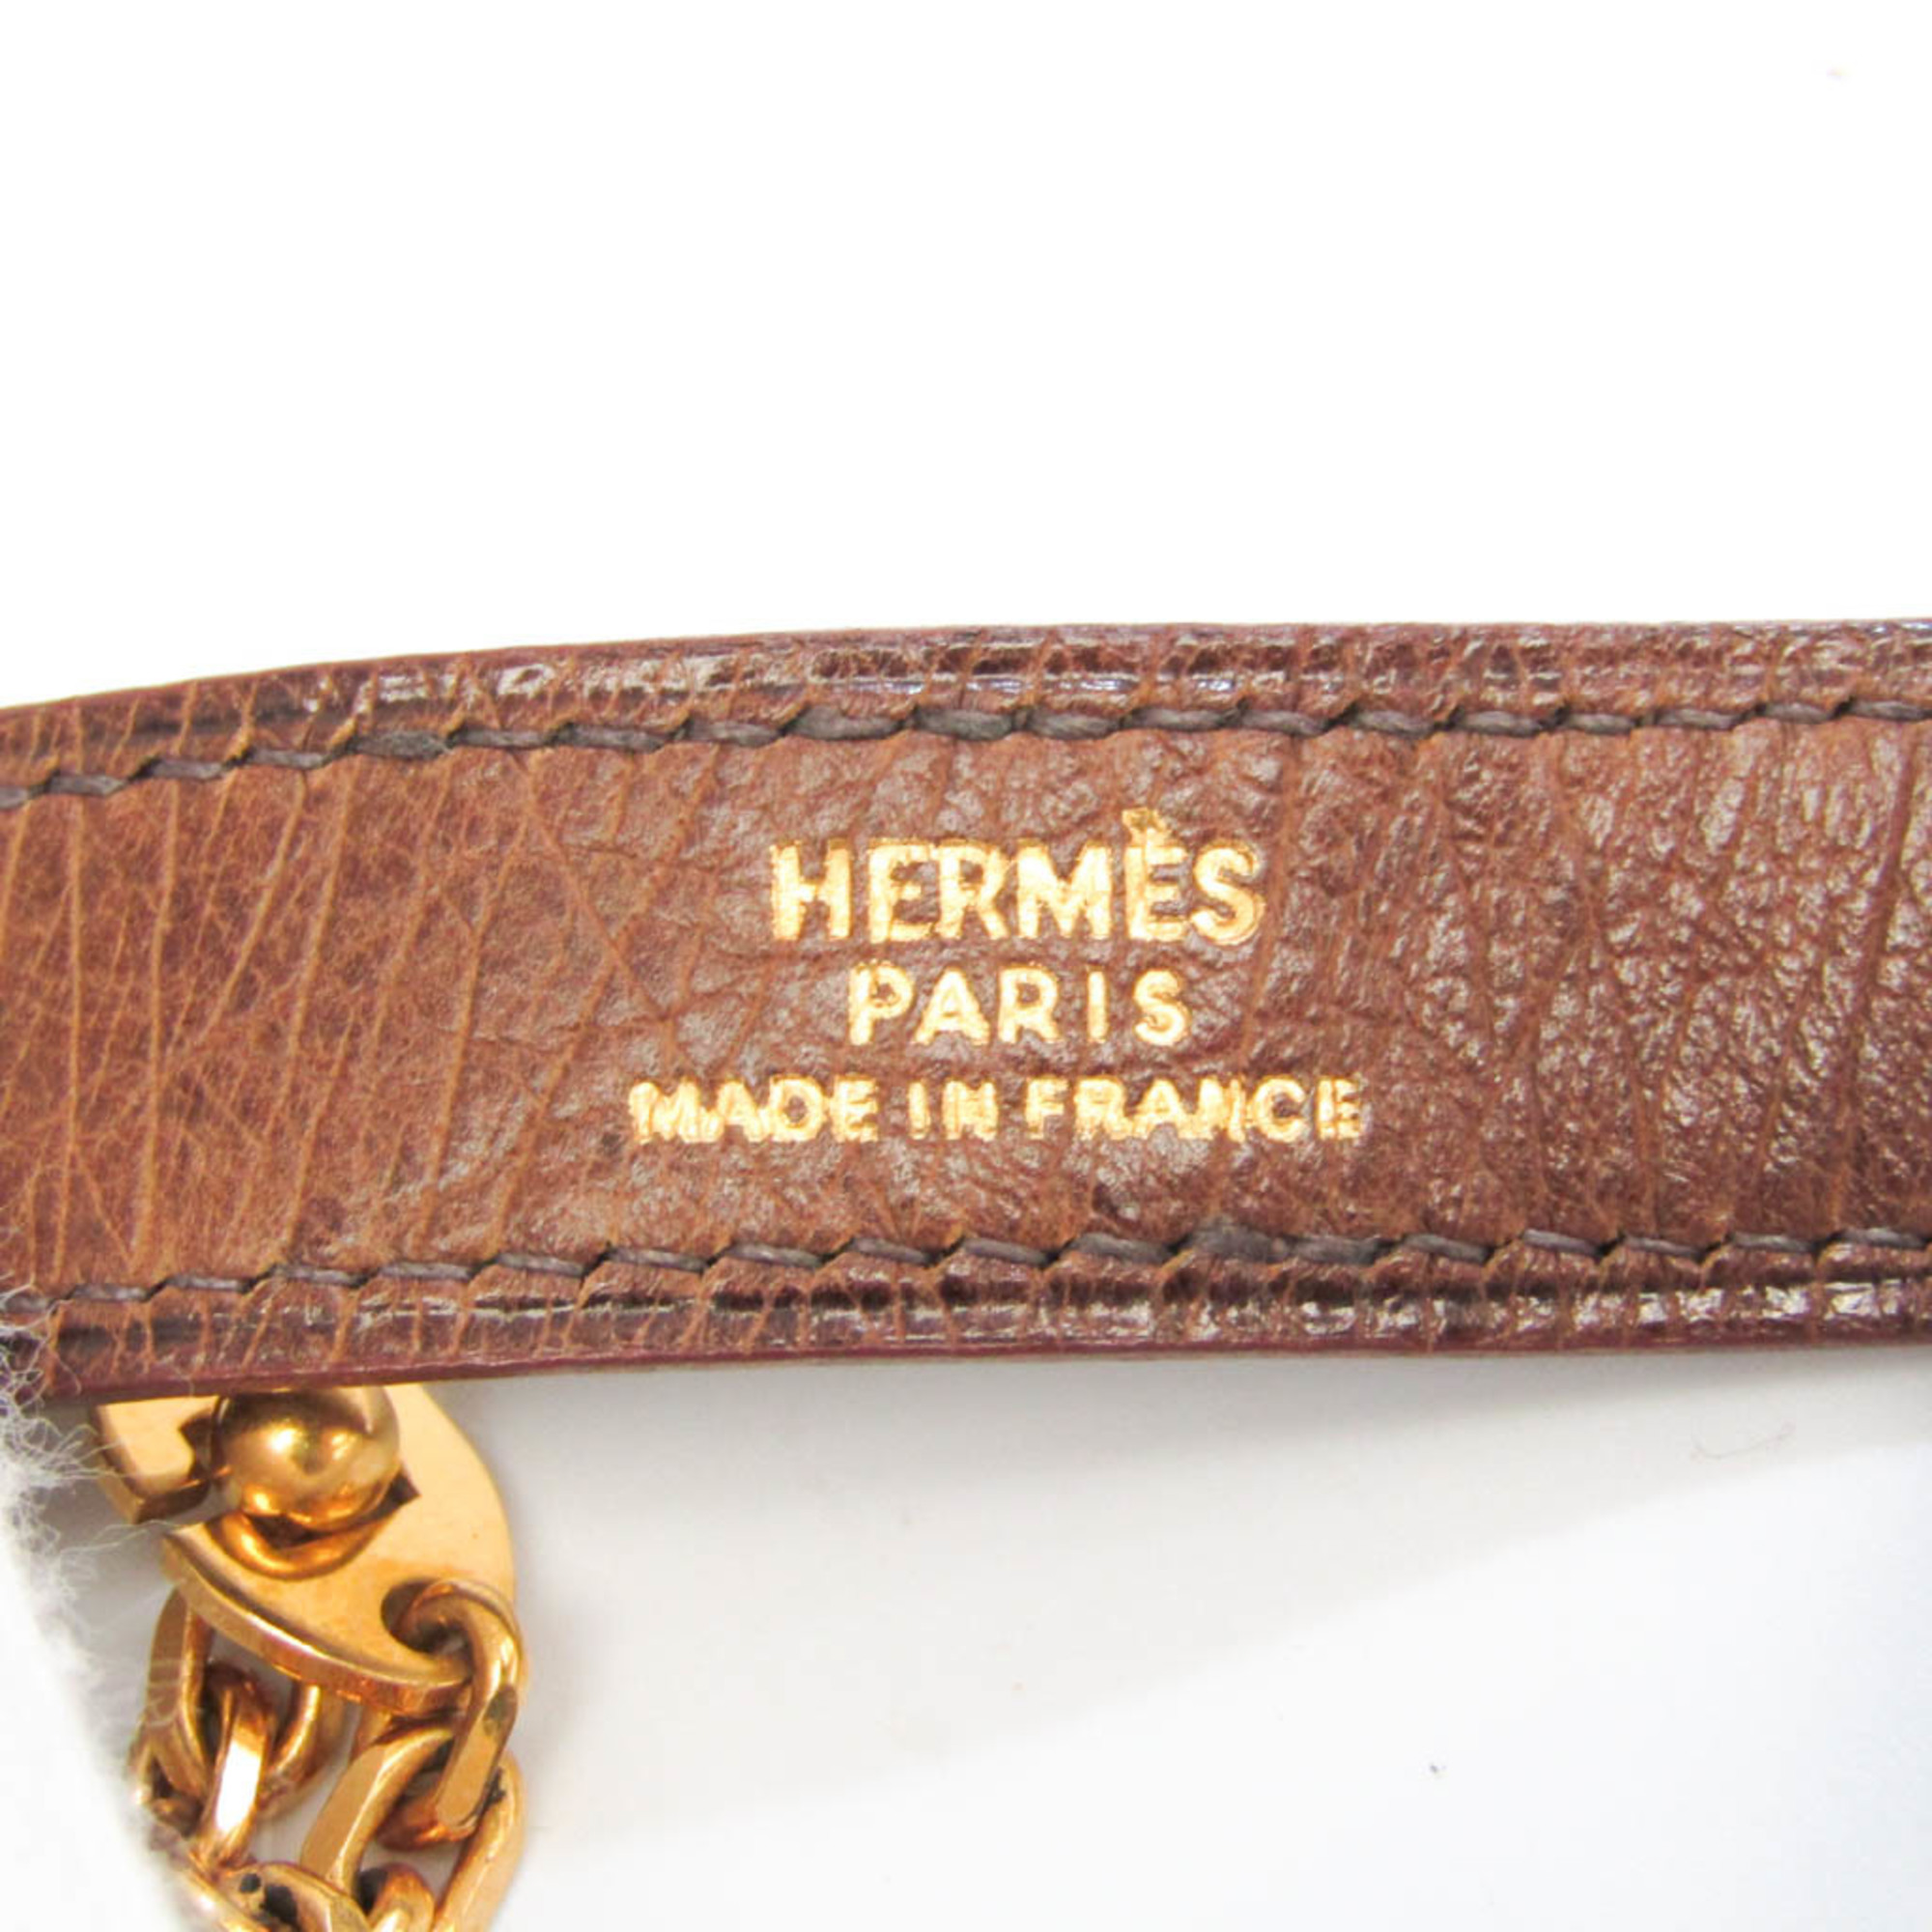 Hermes Nomade Women's Glove Holder Dark Brown,Gold